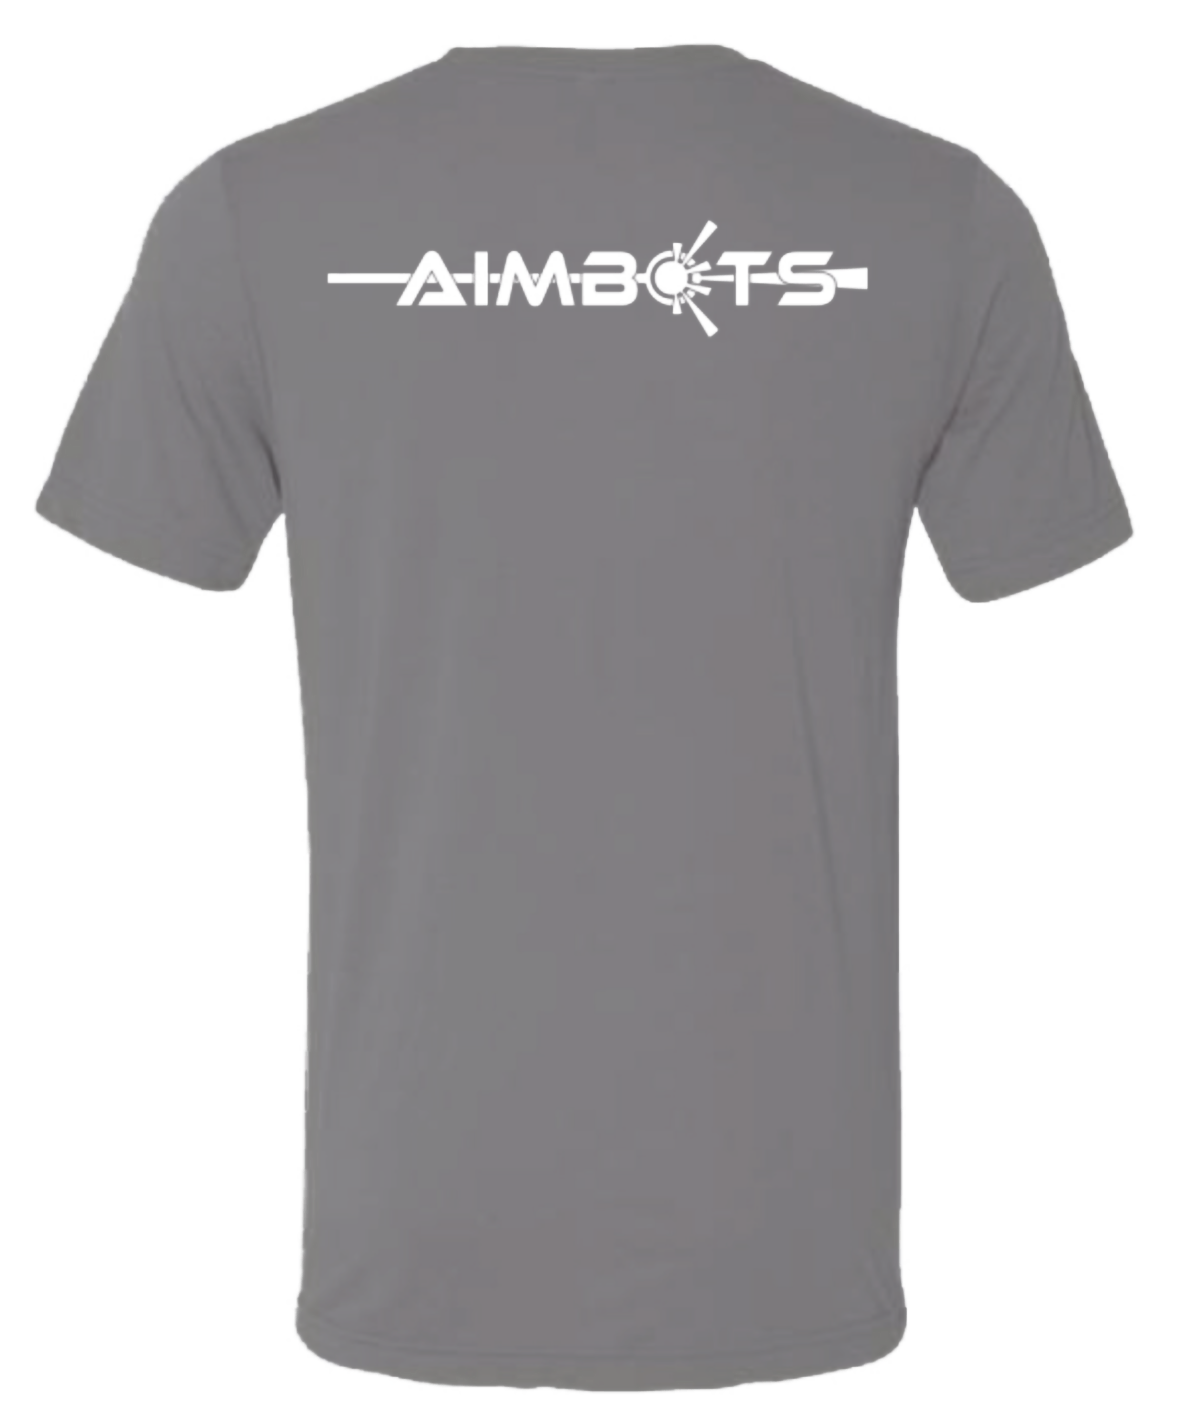 Aimbots 2022 Team T-Shirt